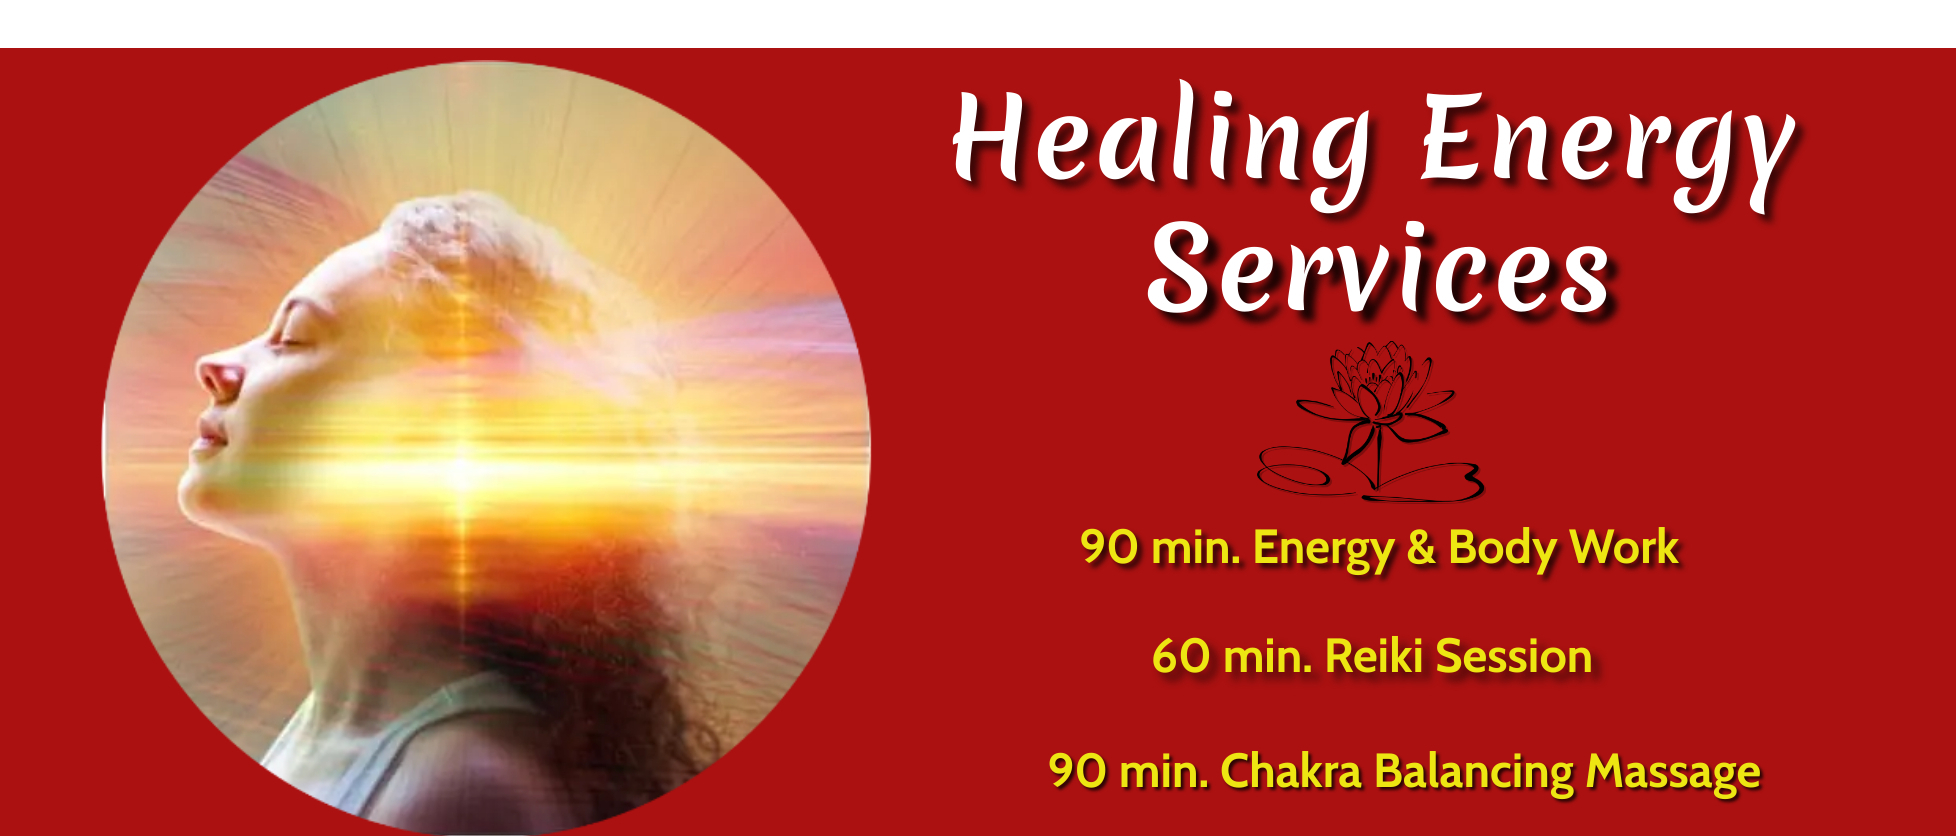 healingservices_slider